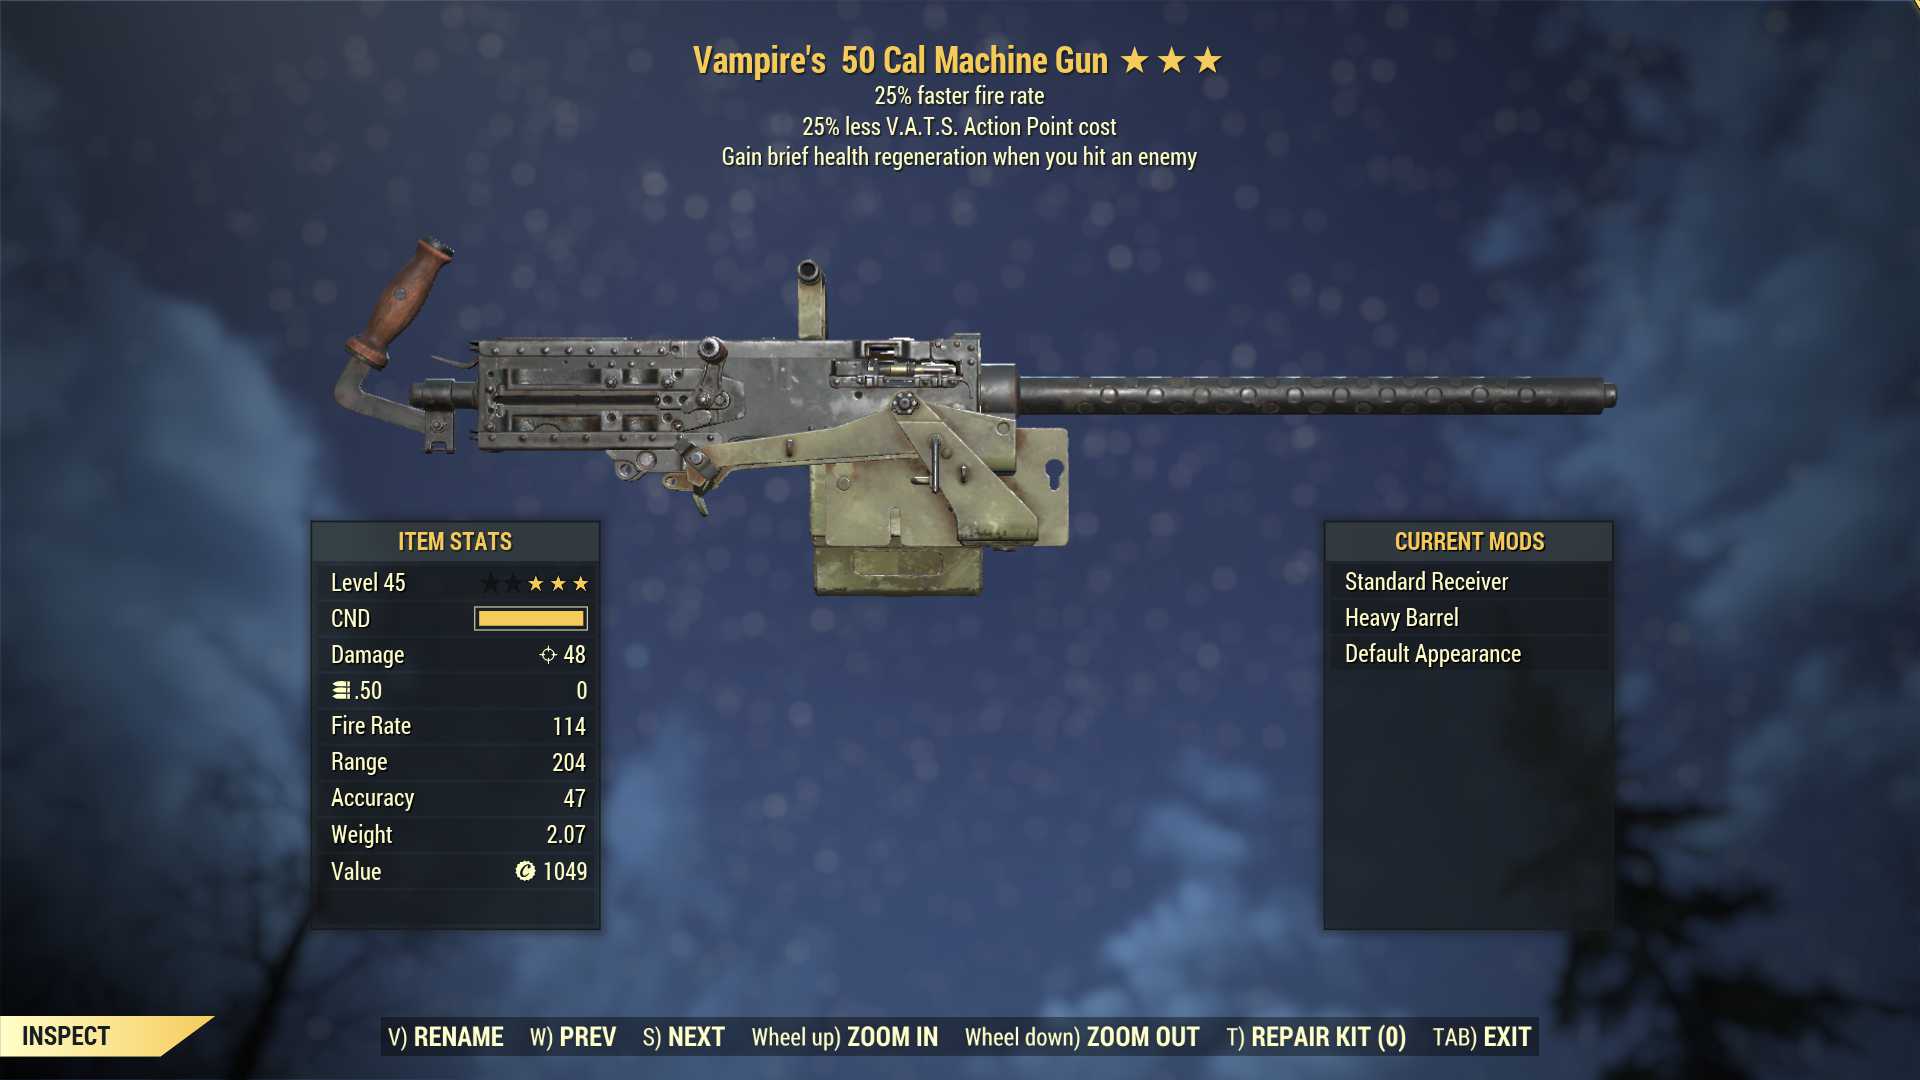 Vampire's 50 Cal Machine Gun (25% faster fire rate, 25% less VATS AP cost)